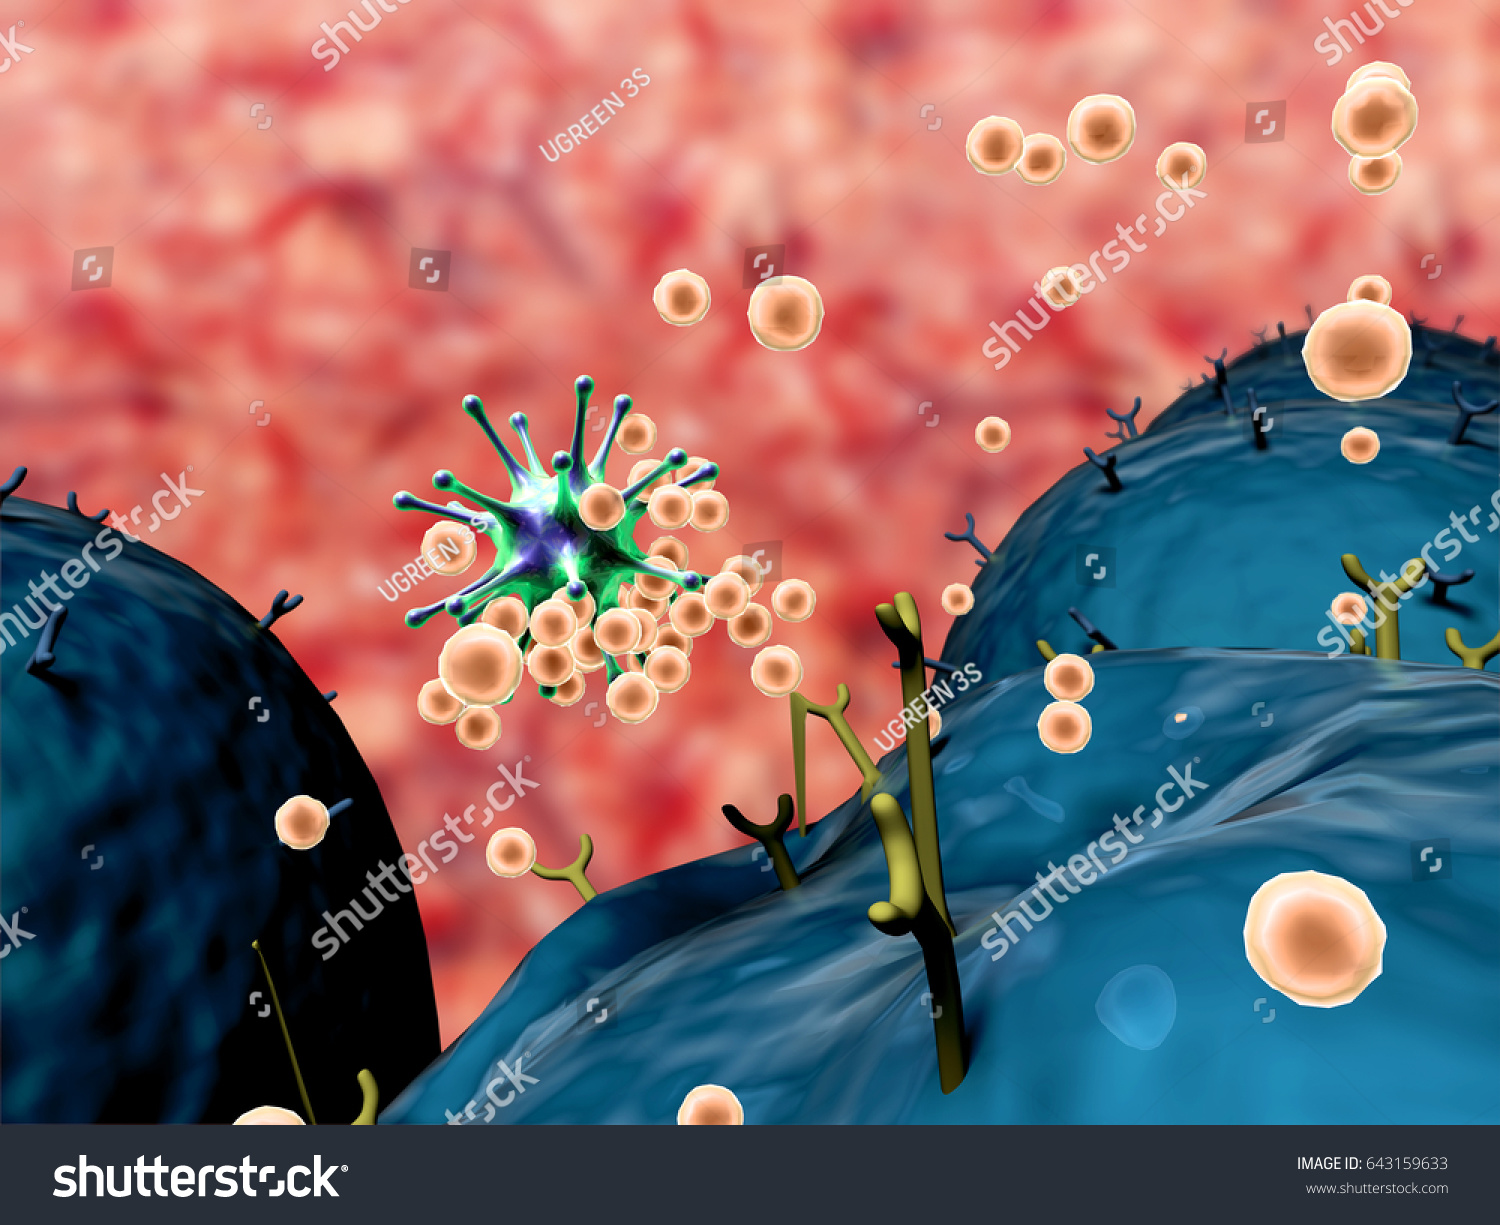 Coronavirus atack the lungs cell, Human Immune System attack the virus, leukocytes attack viruses #643159633